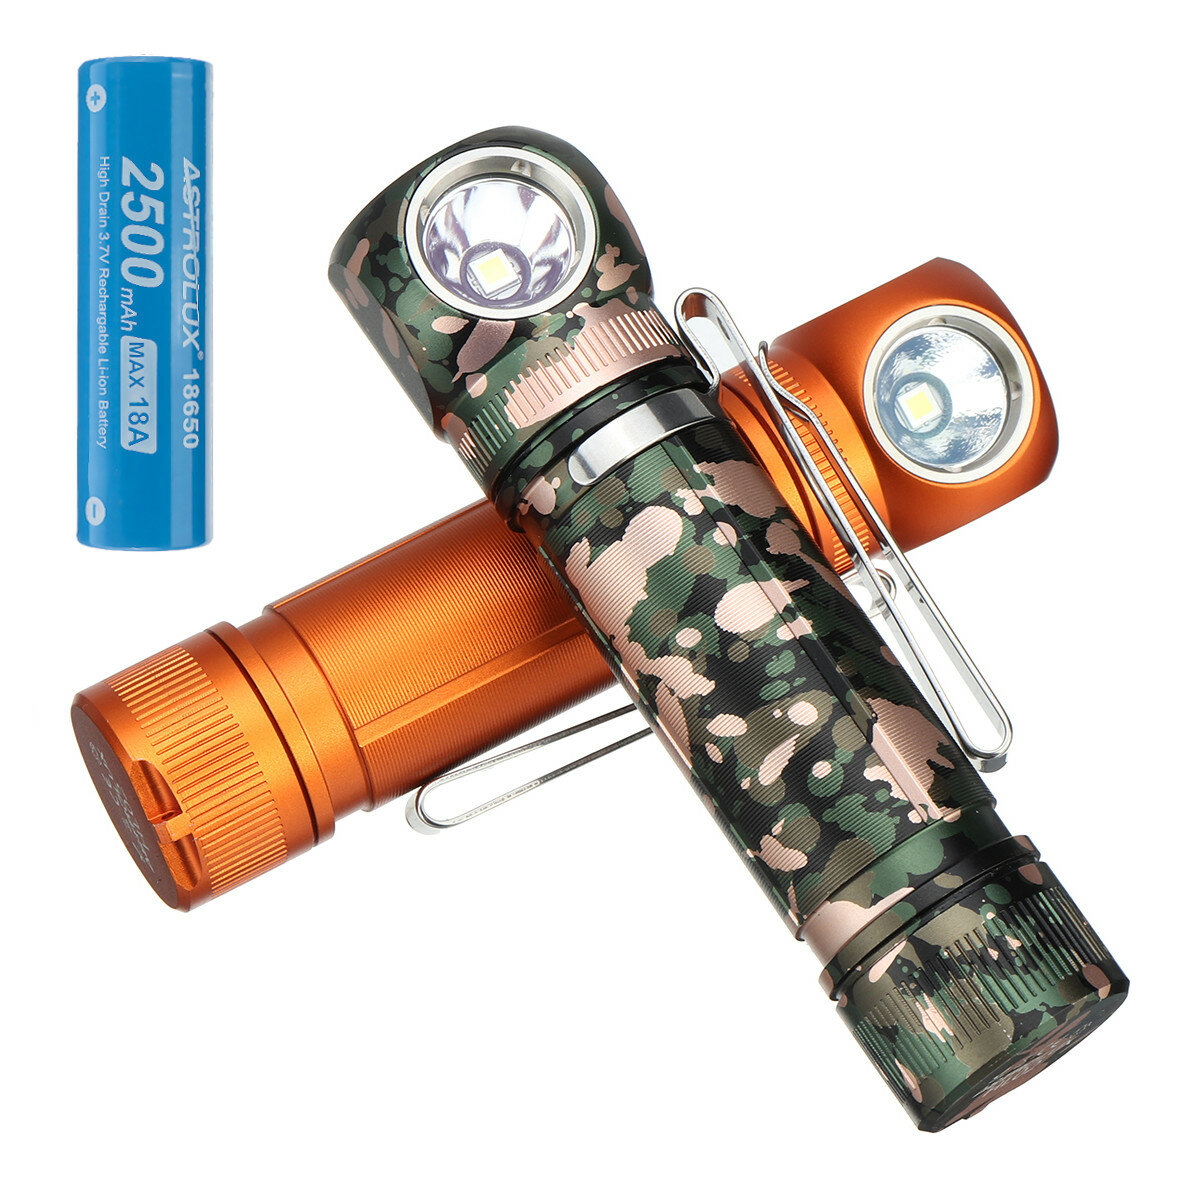 Astrolux? HL02 SFS80 1600lm 210m L-shape Flashlight LED Headlamp 18650/18350 Type-C Rechargeable Hig